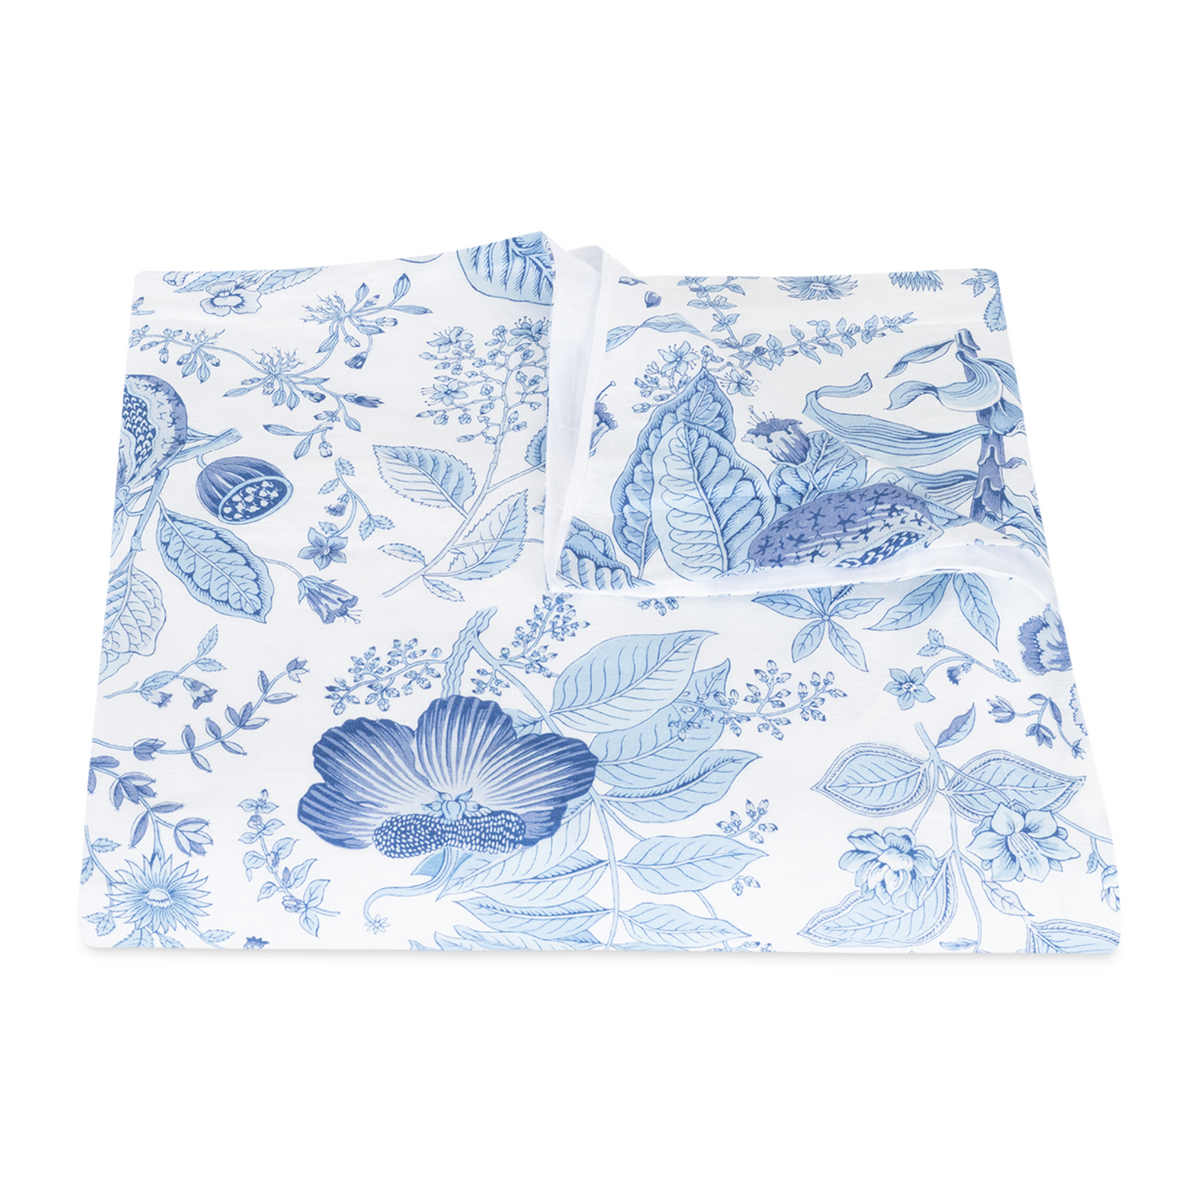 Folded Duvet Cover of Matouk Schumacher Pomegranate Linen Bedding in Porcelain Blue Color